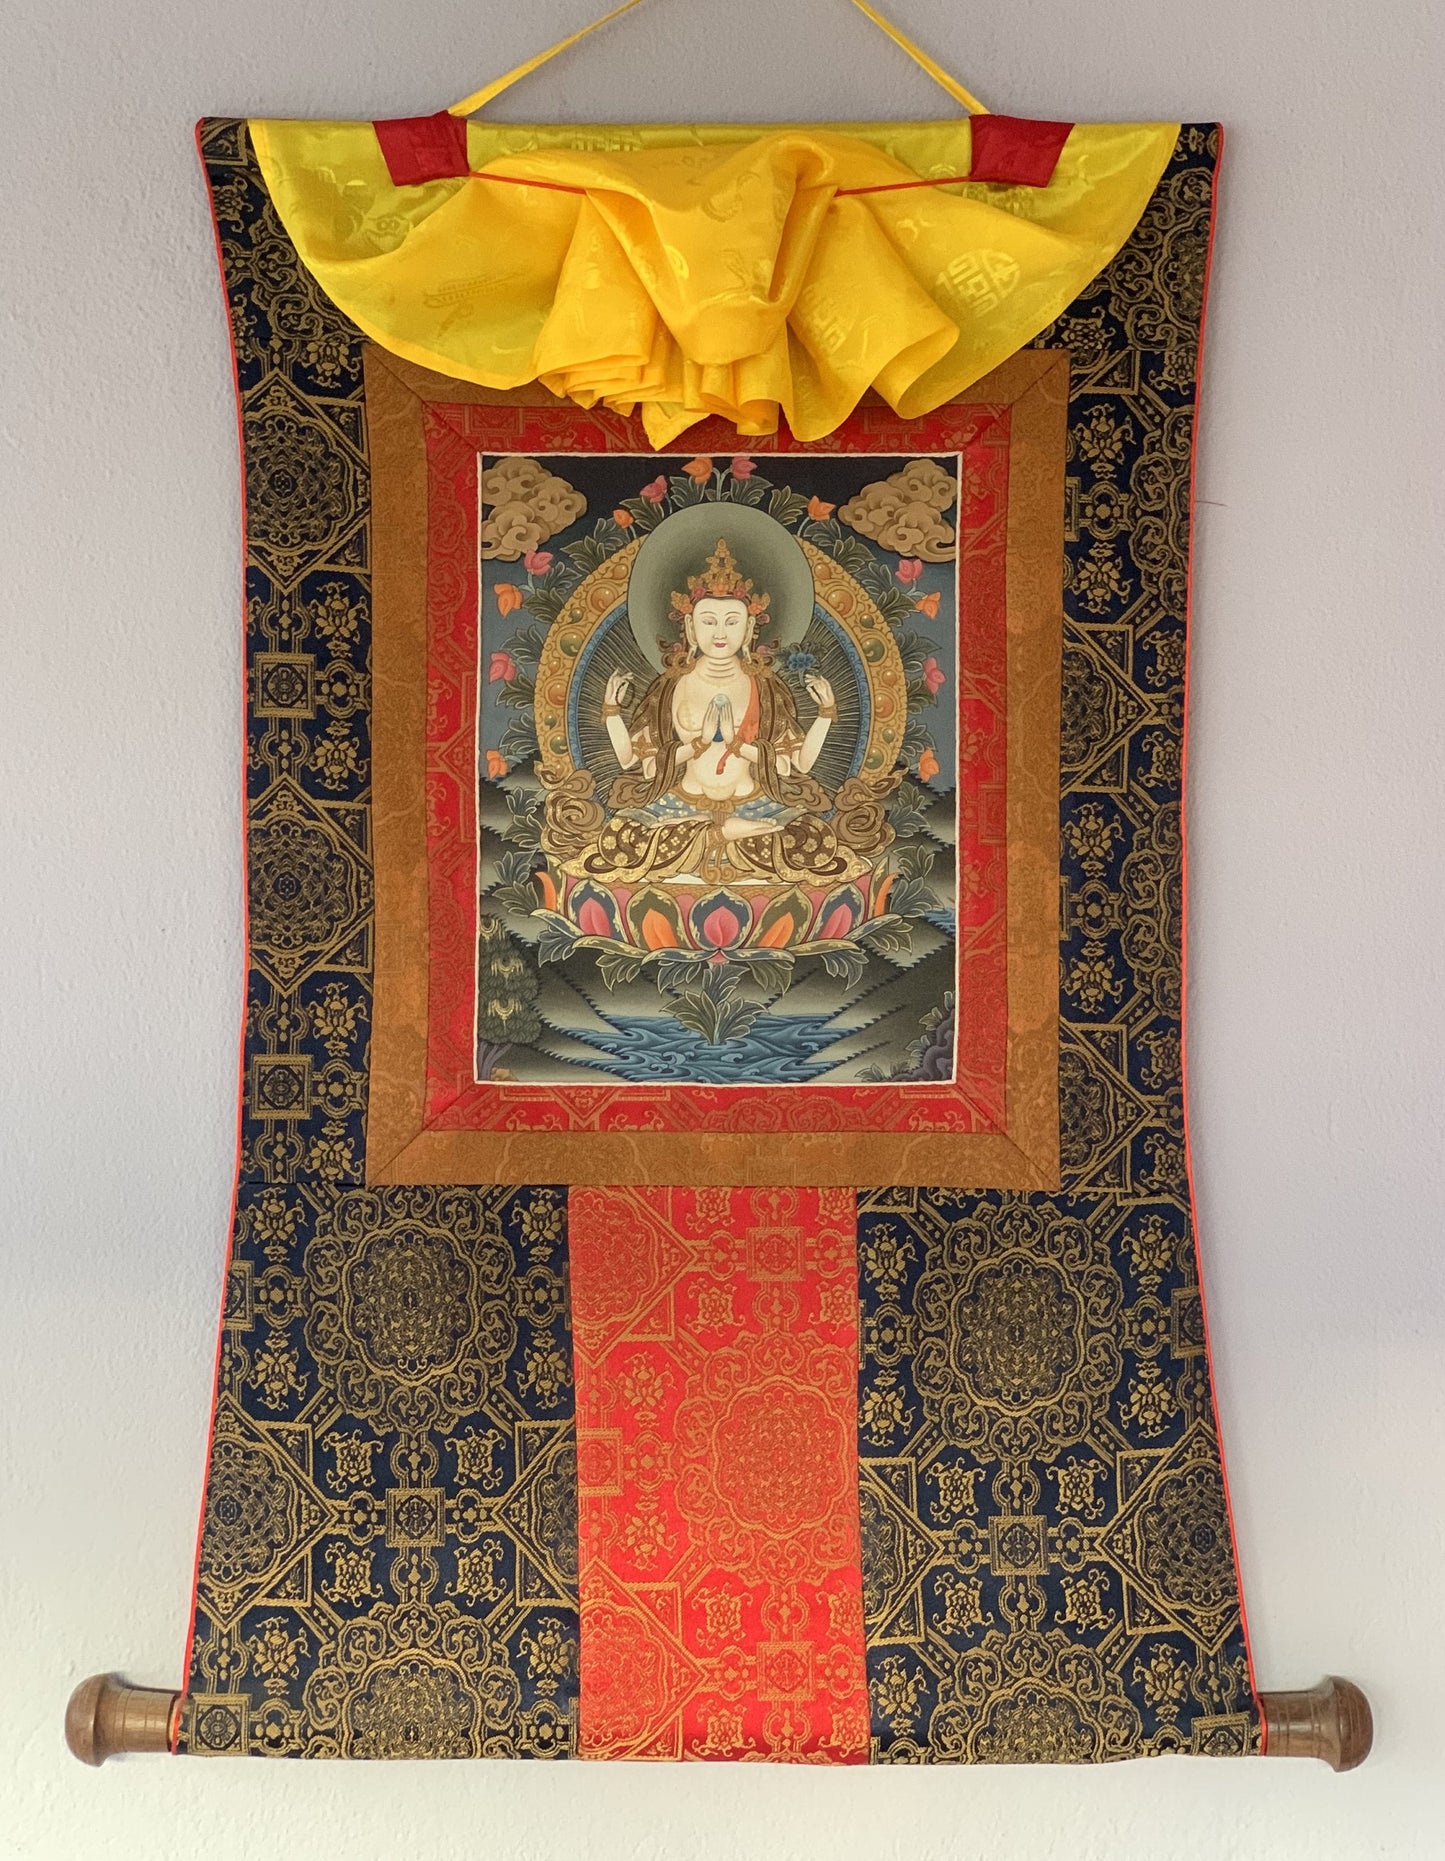 4 Armed Chyangresi, Chenrezig, Avalokiteshvara, Rare, Masterpiece Original Hand Painted Tibetan Thangka Painting with Premium Silk Border